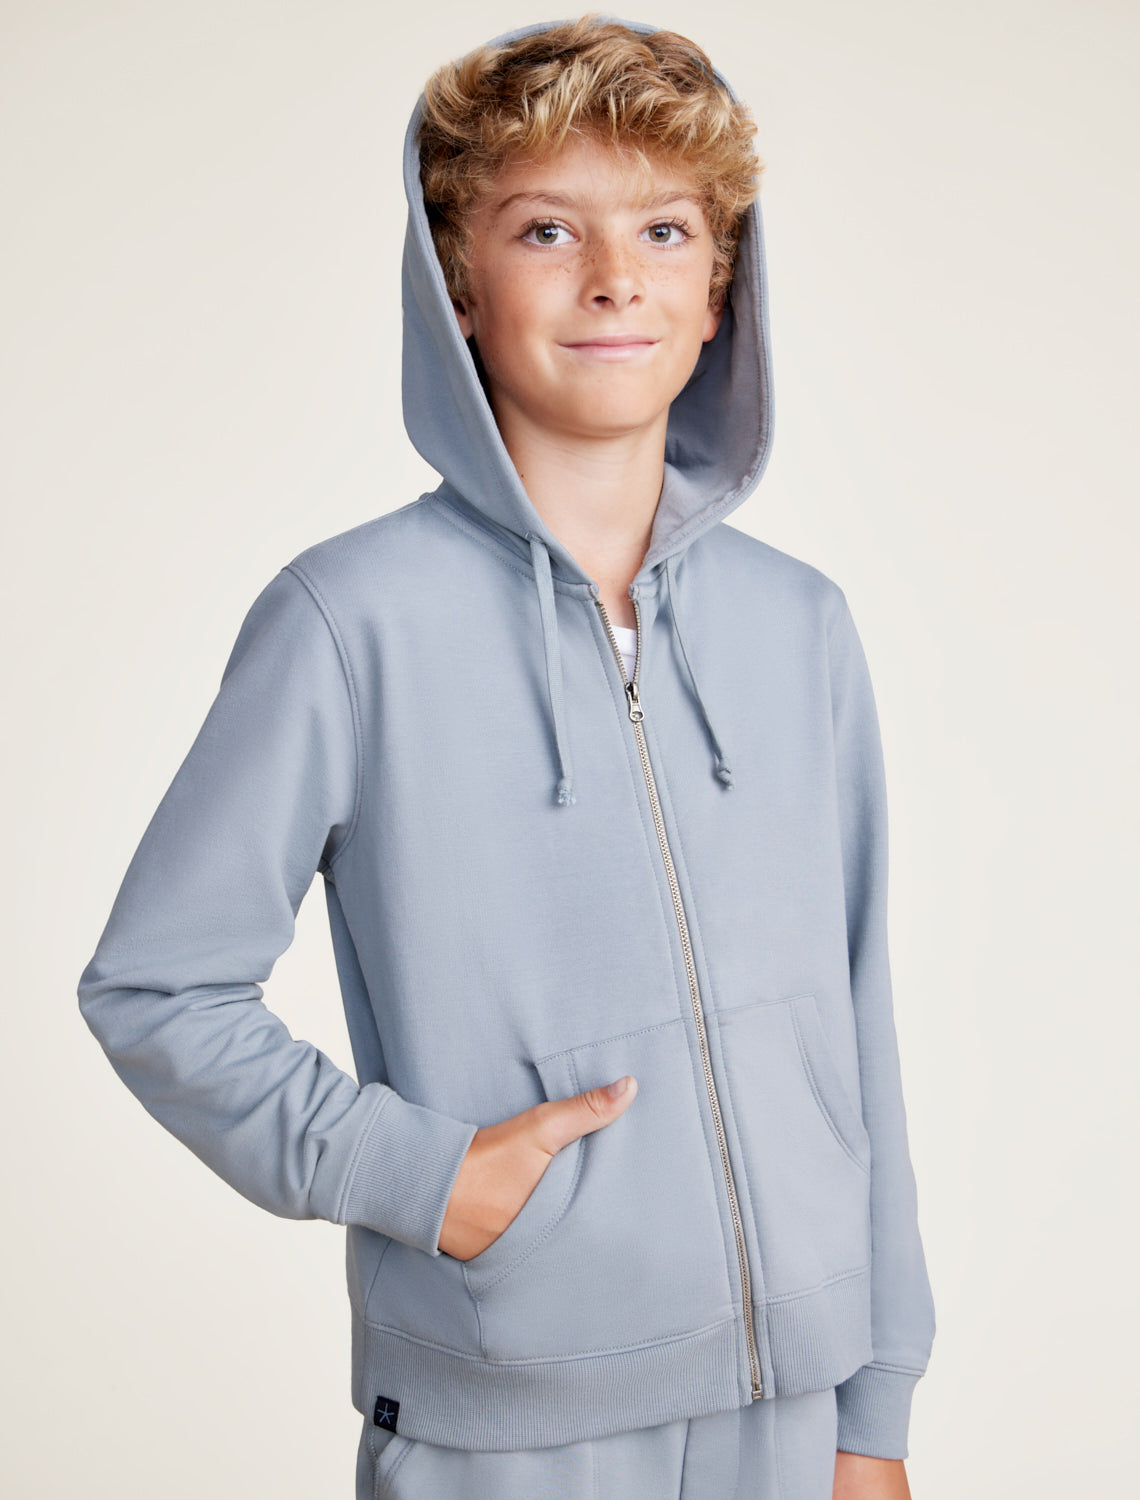 Malibu Collection® Youth Boy's Pima Cotton Fleece Zip-Up Hoodie